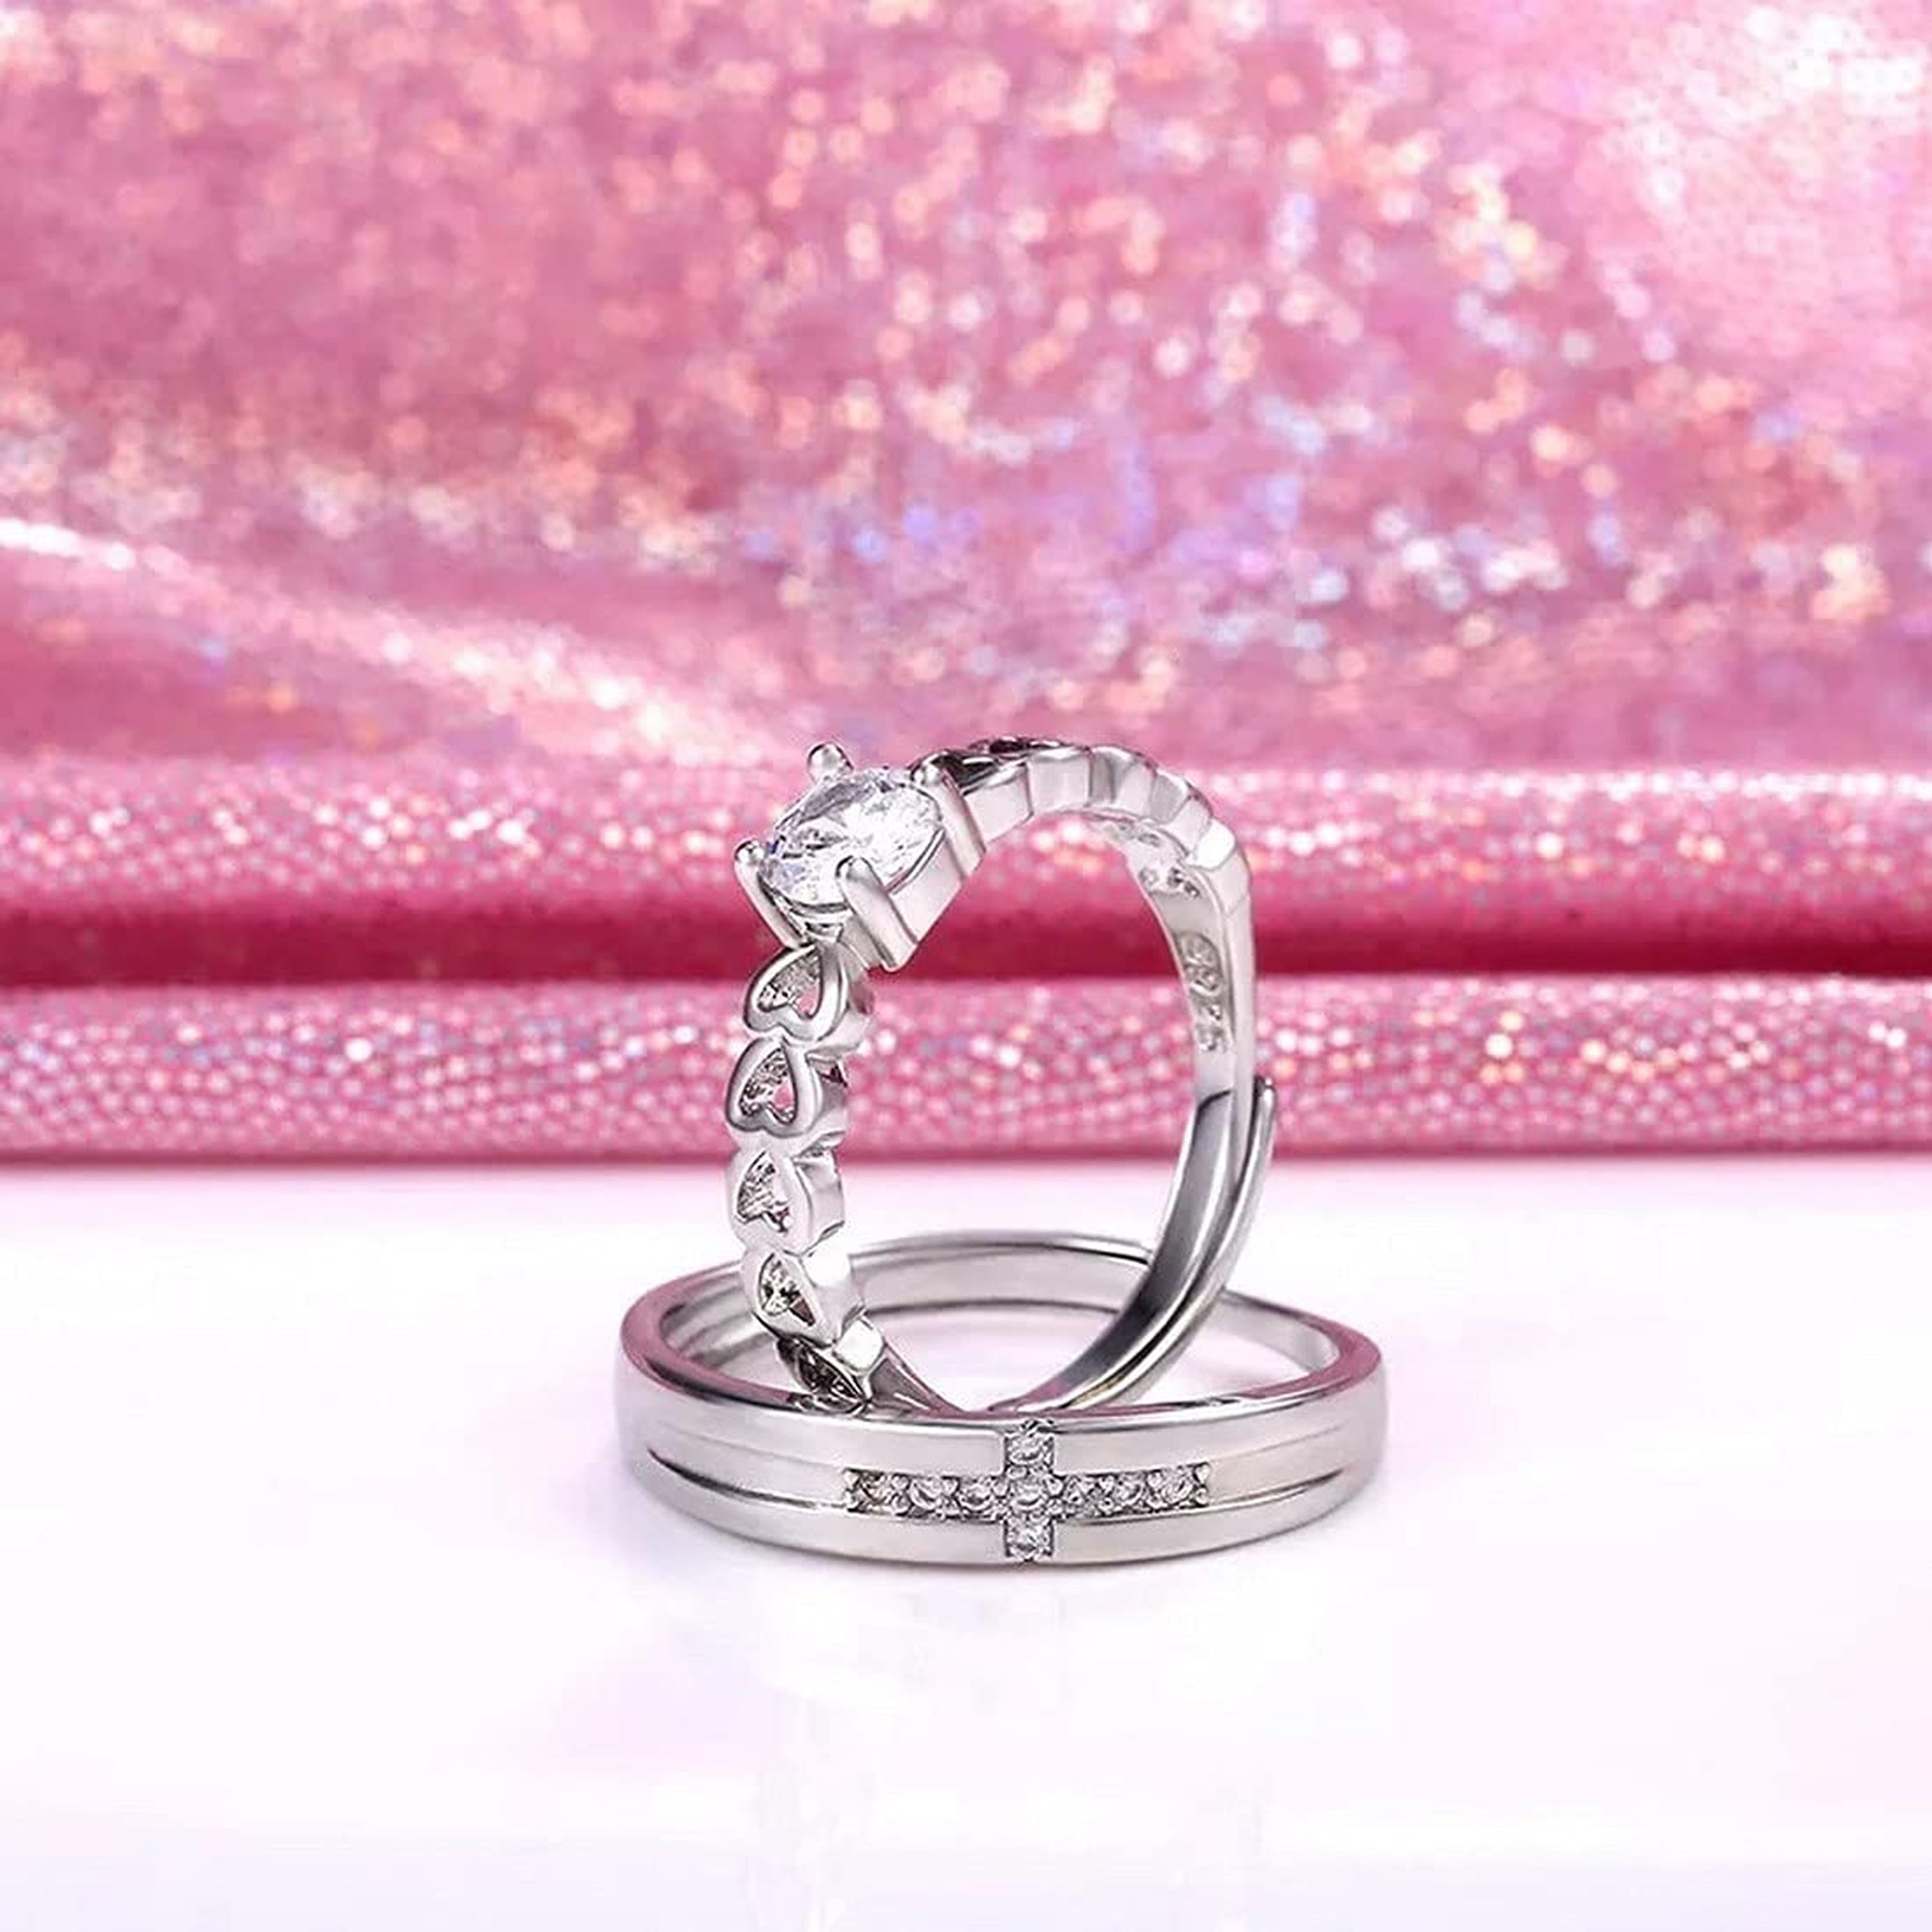 New Romantic Silver Ring Set